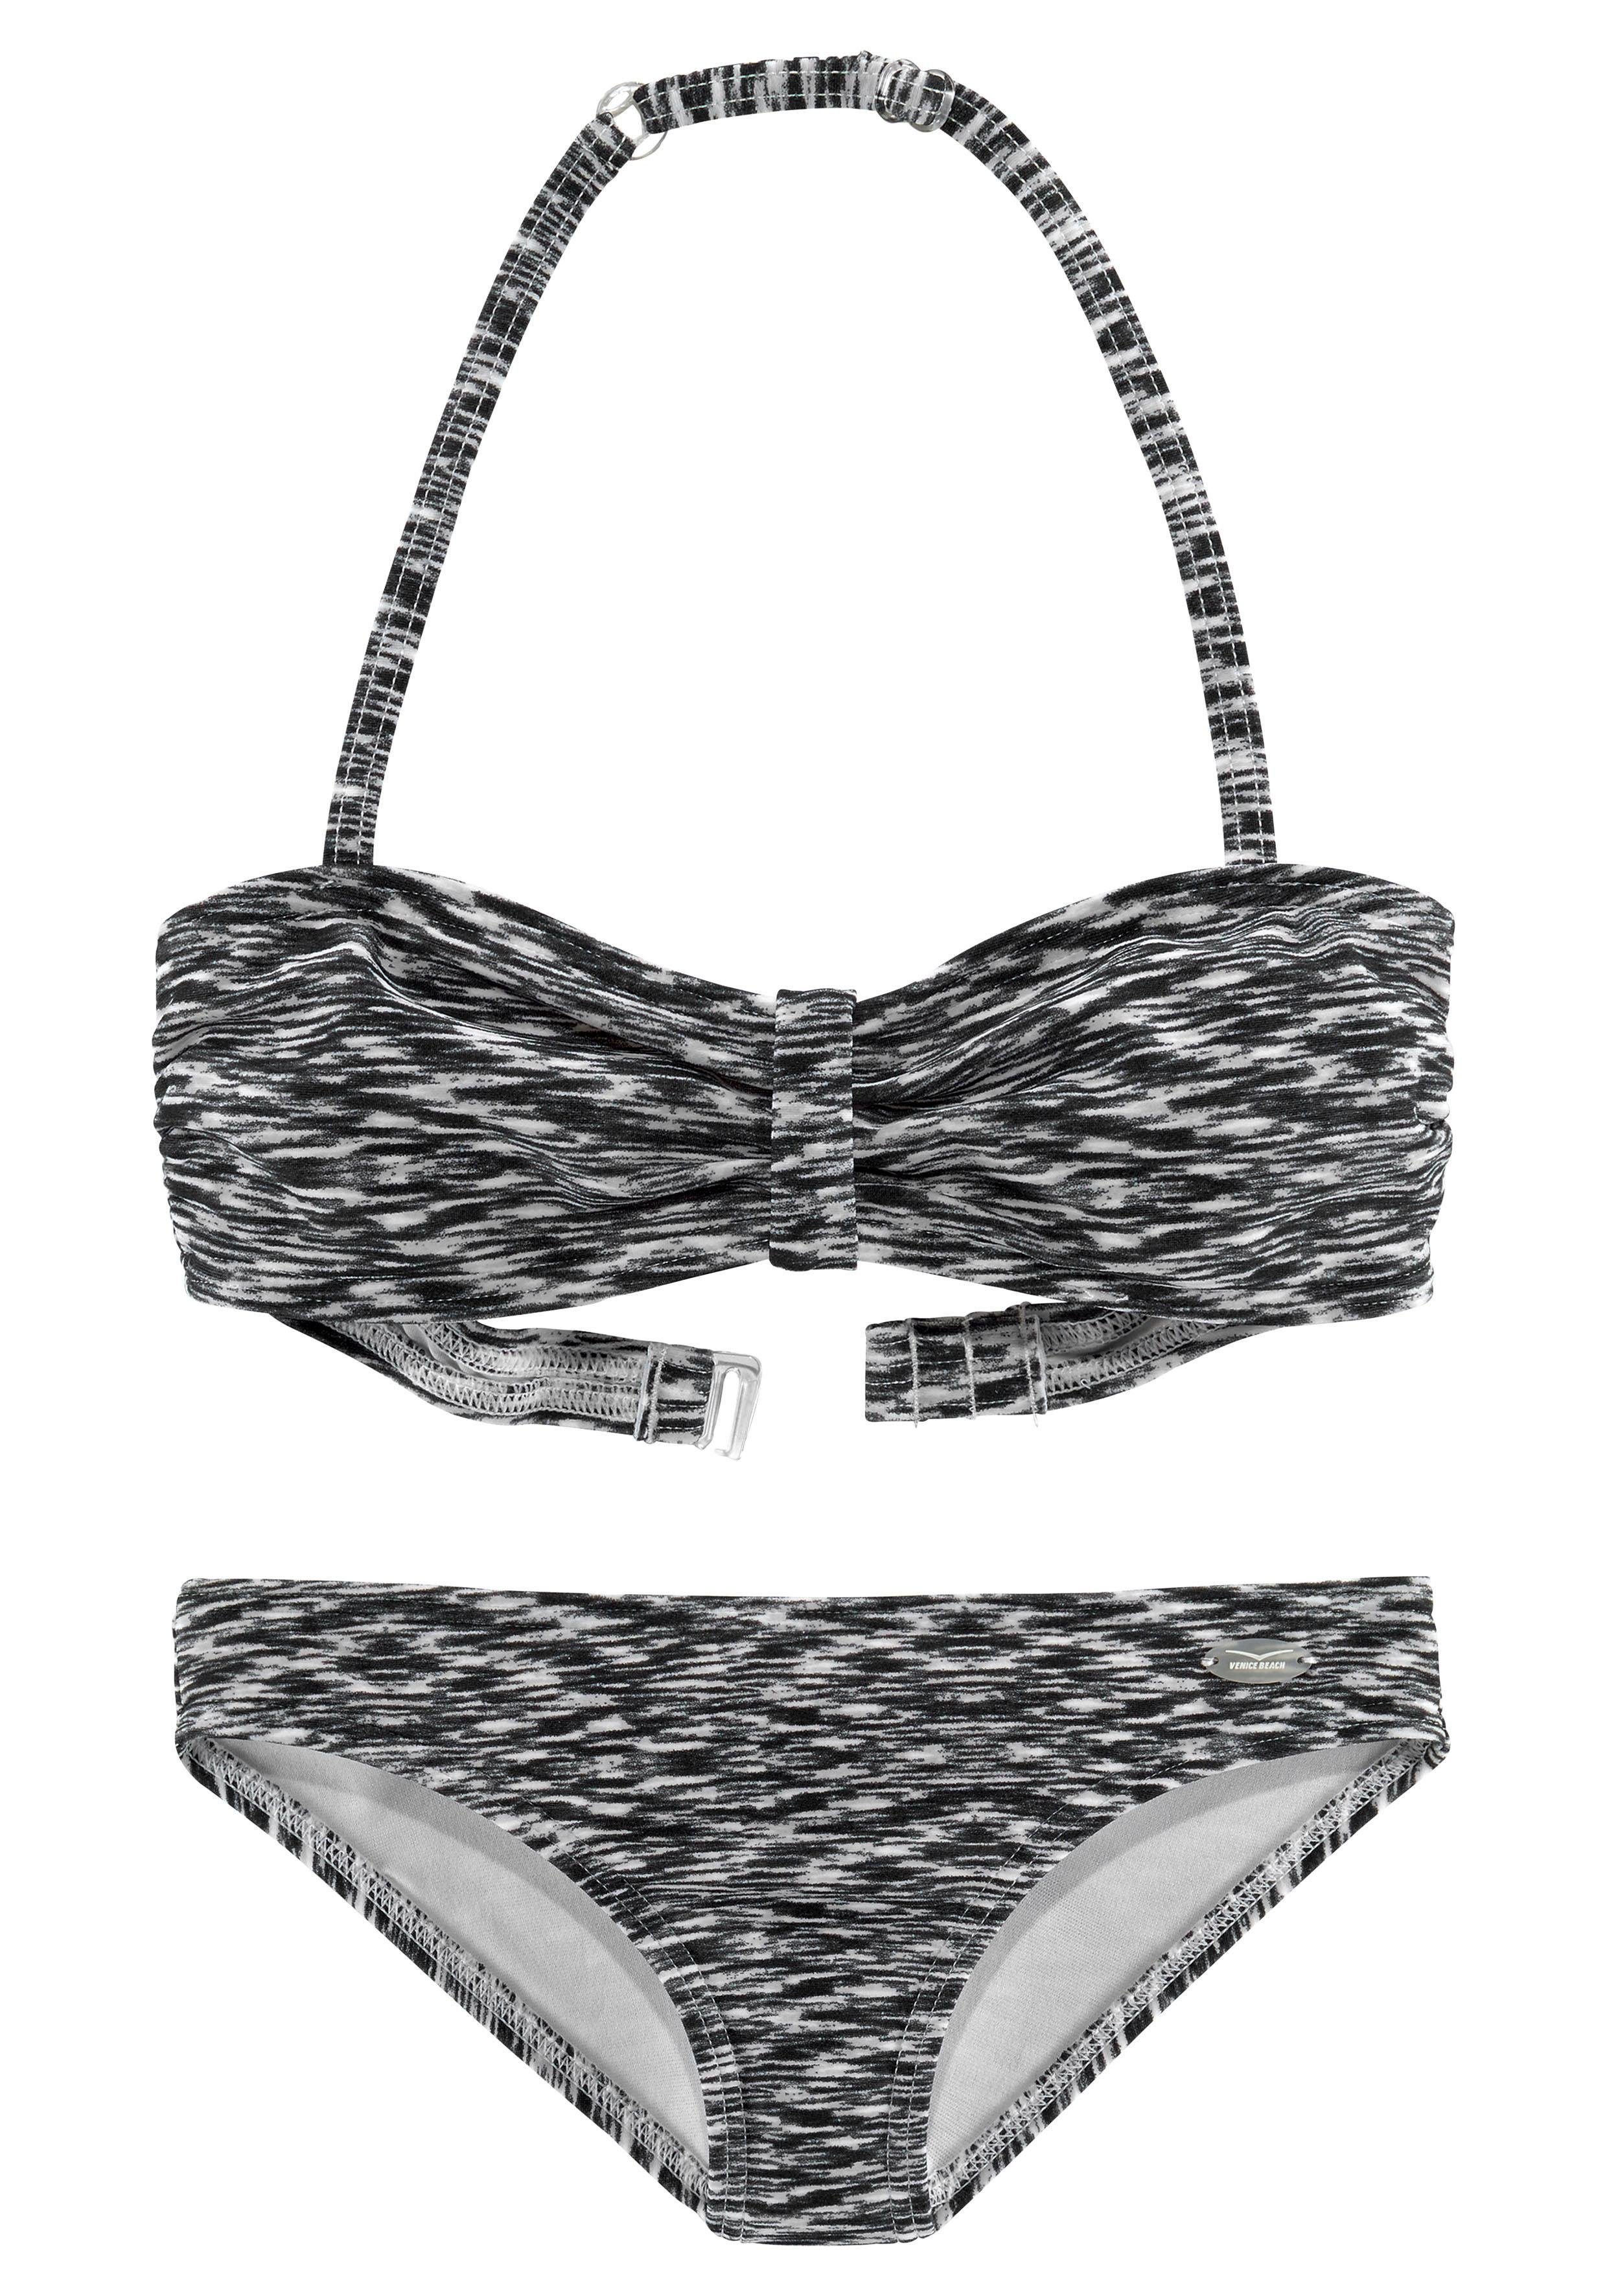 Venice Beach Melange-Optik in schwarz-weiß Bandeau-Bikini